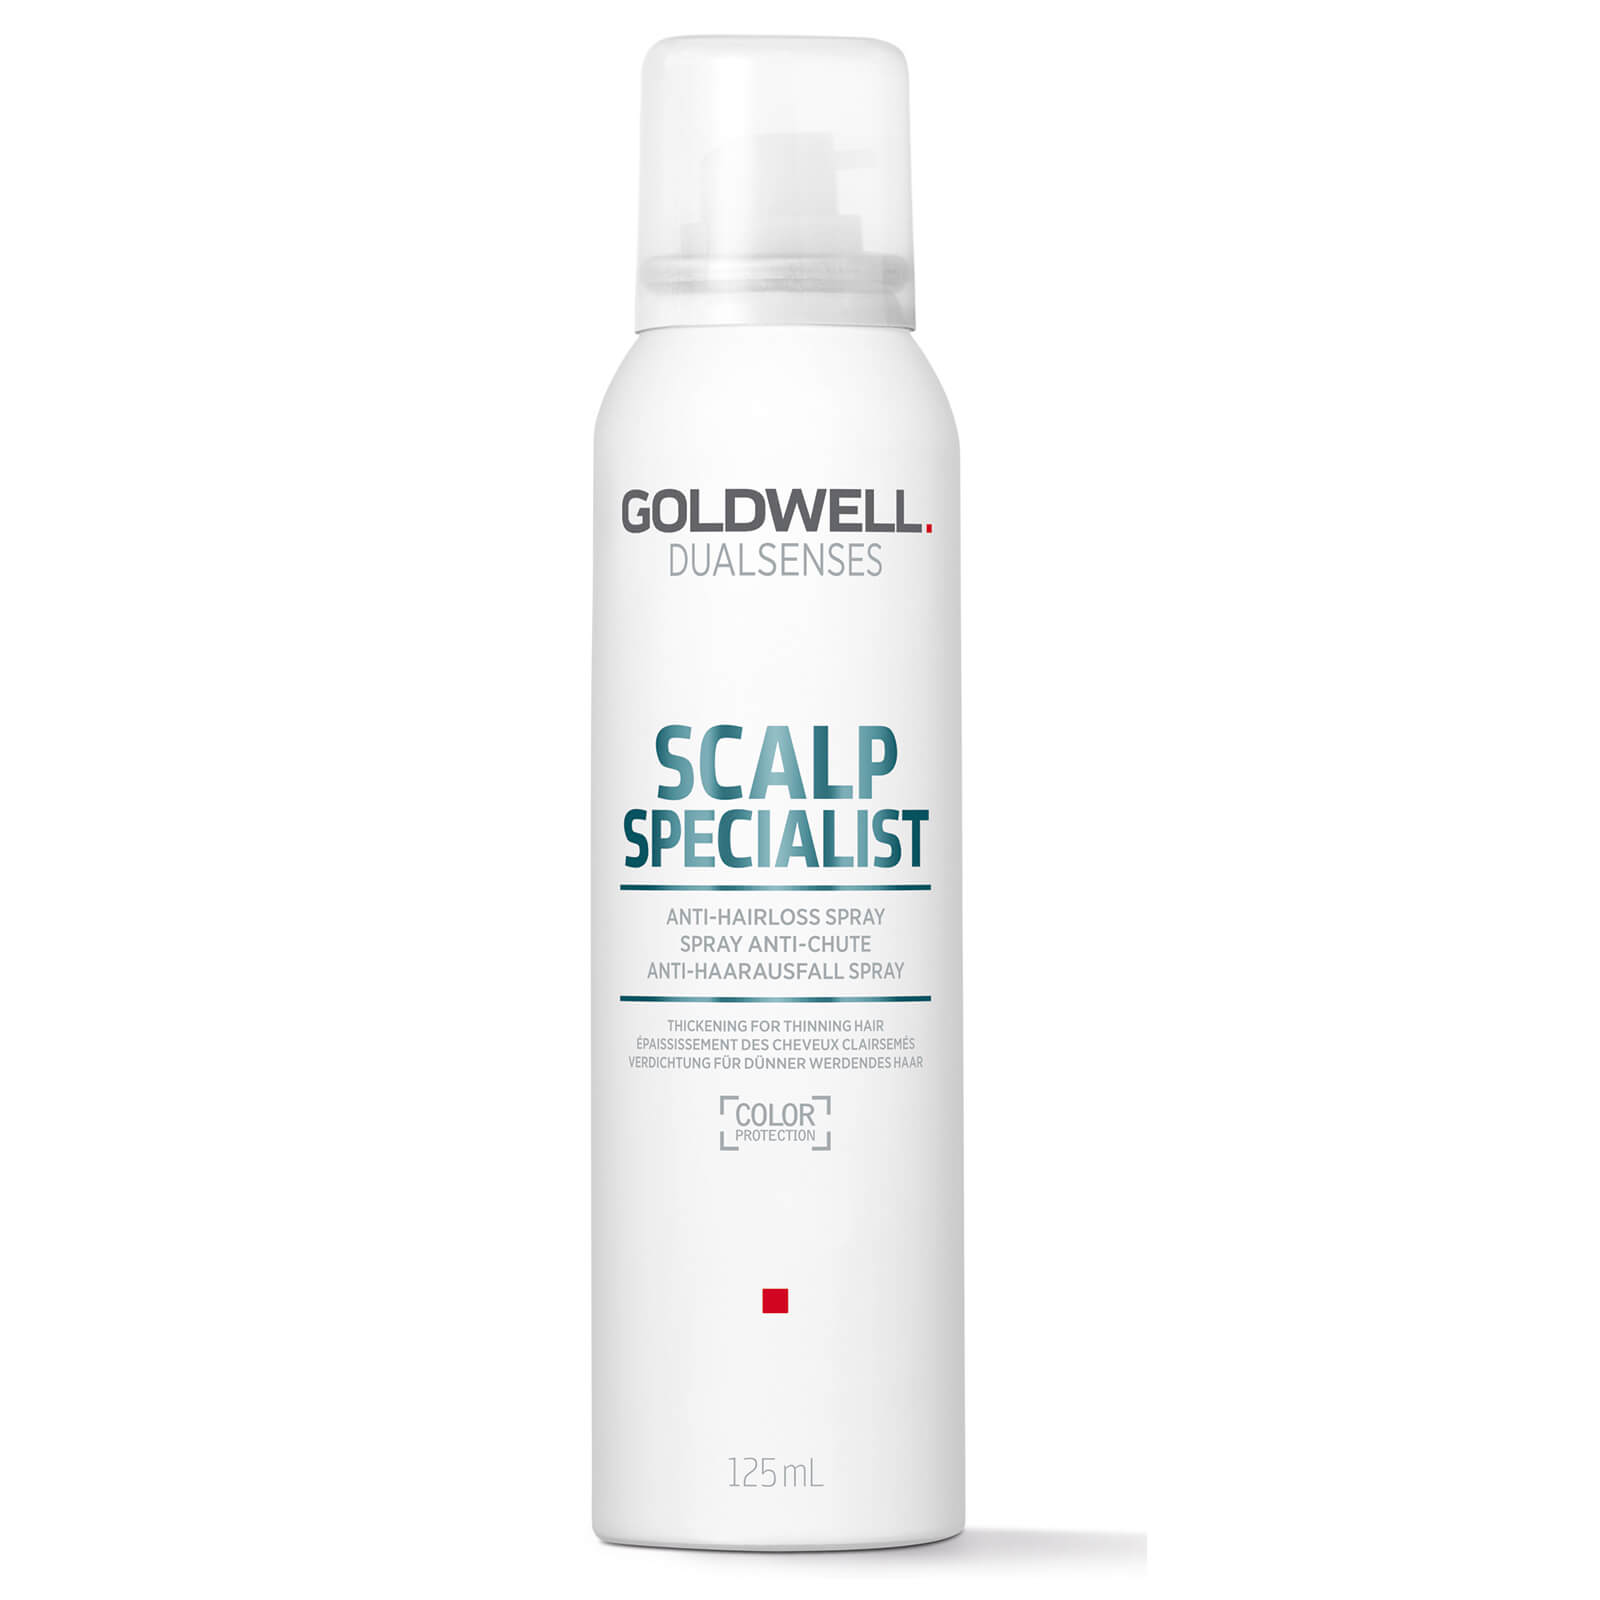 Goldwell Dualsenses Scalp Specialist Anti-Hair Loss Spray 125ml lookfantastic.com imagine